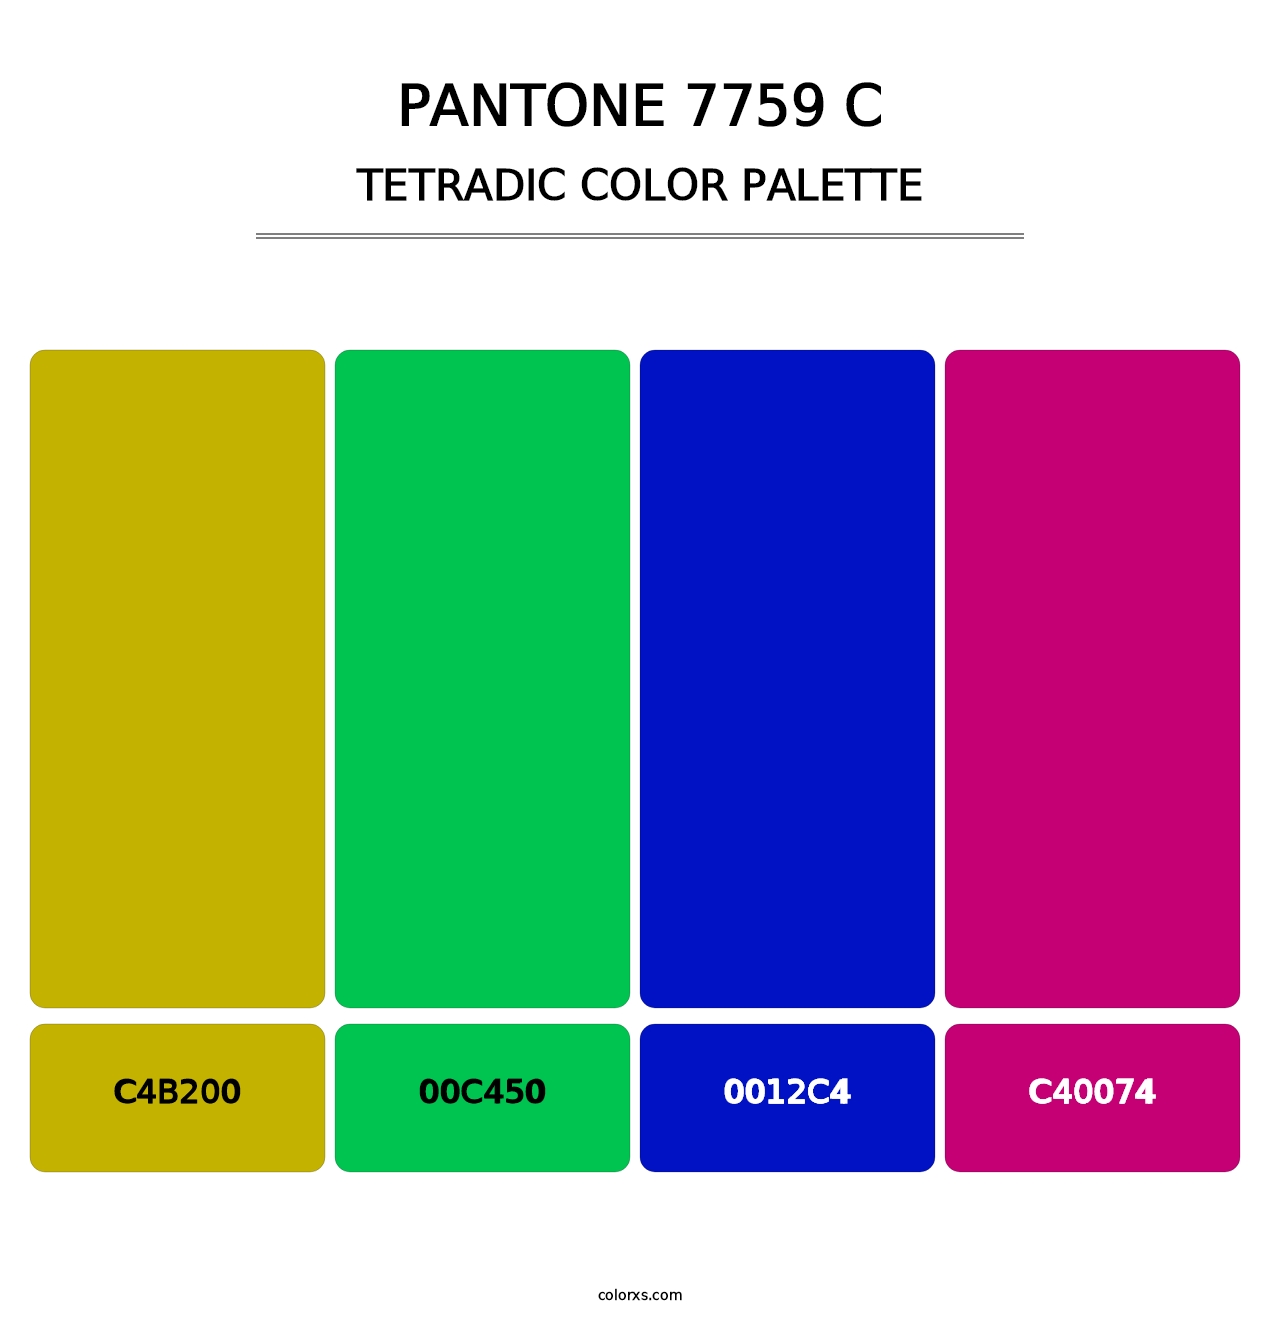 PANTONE 7759 C - Tetradic Color Palette